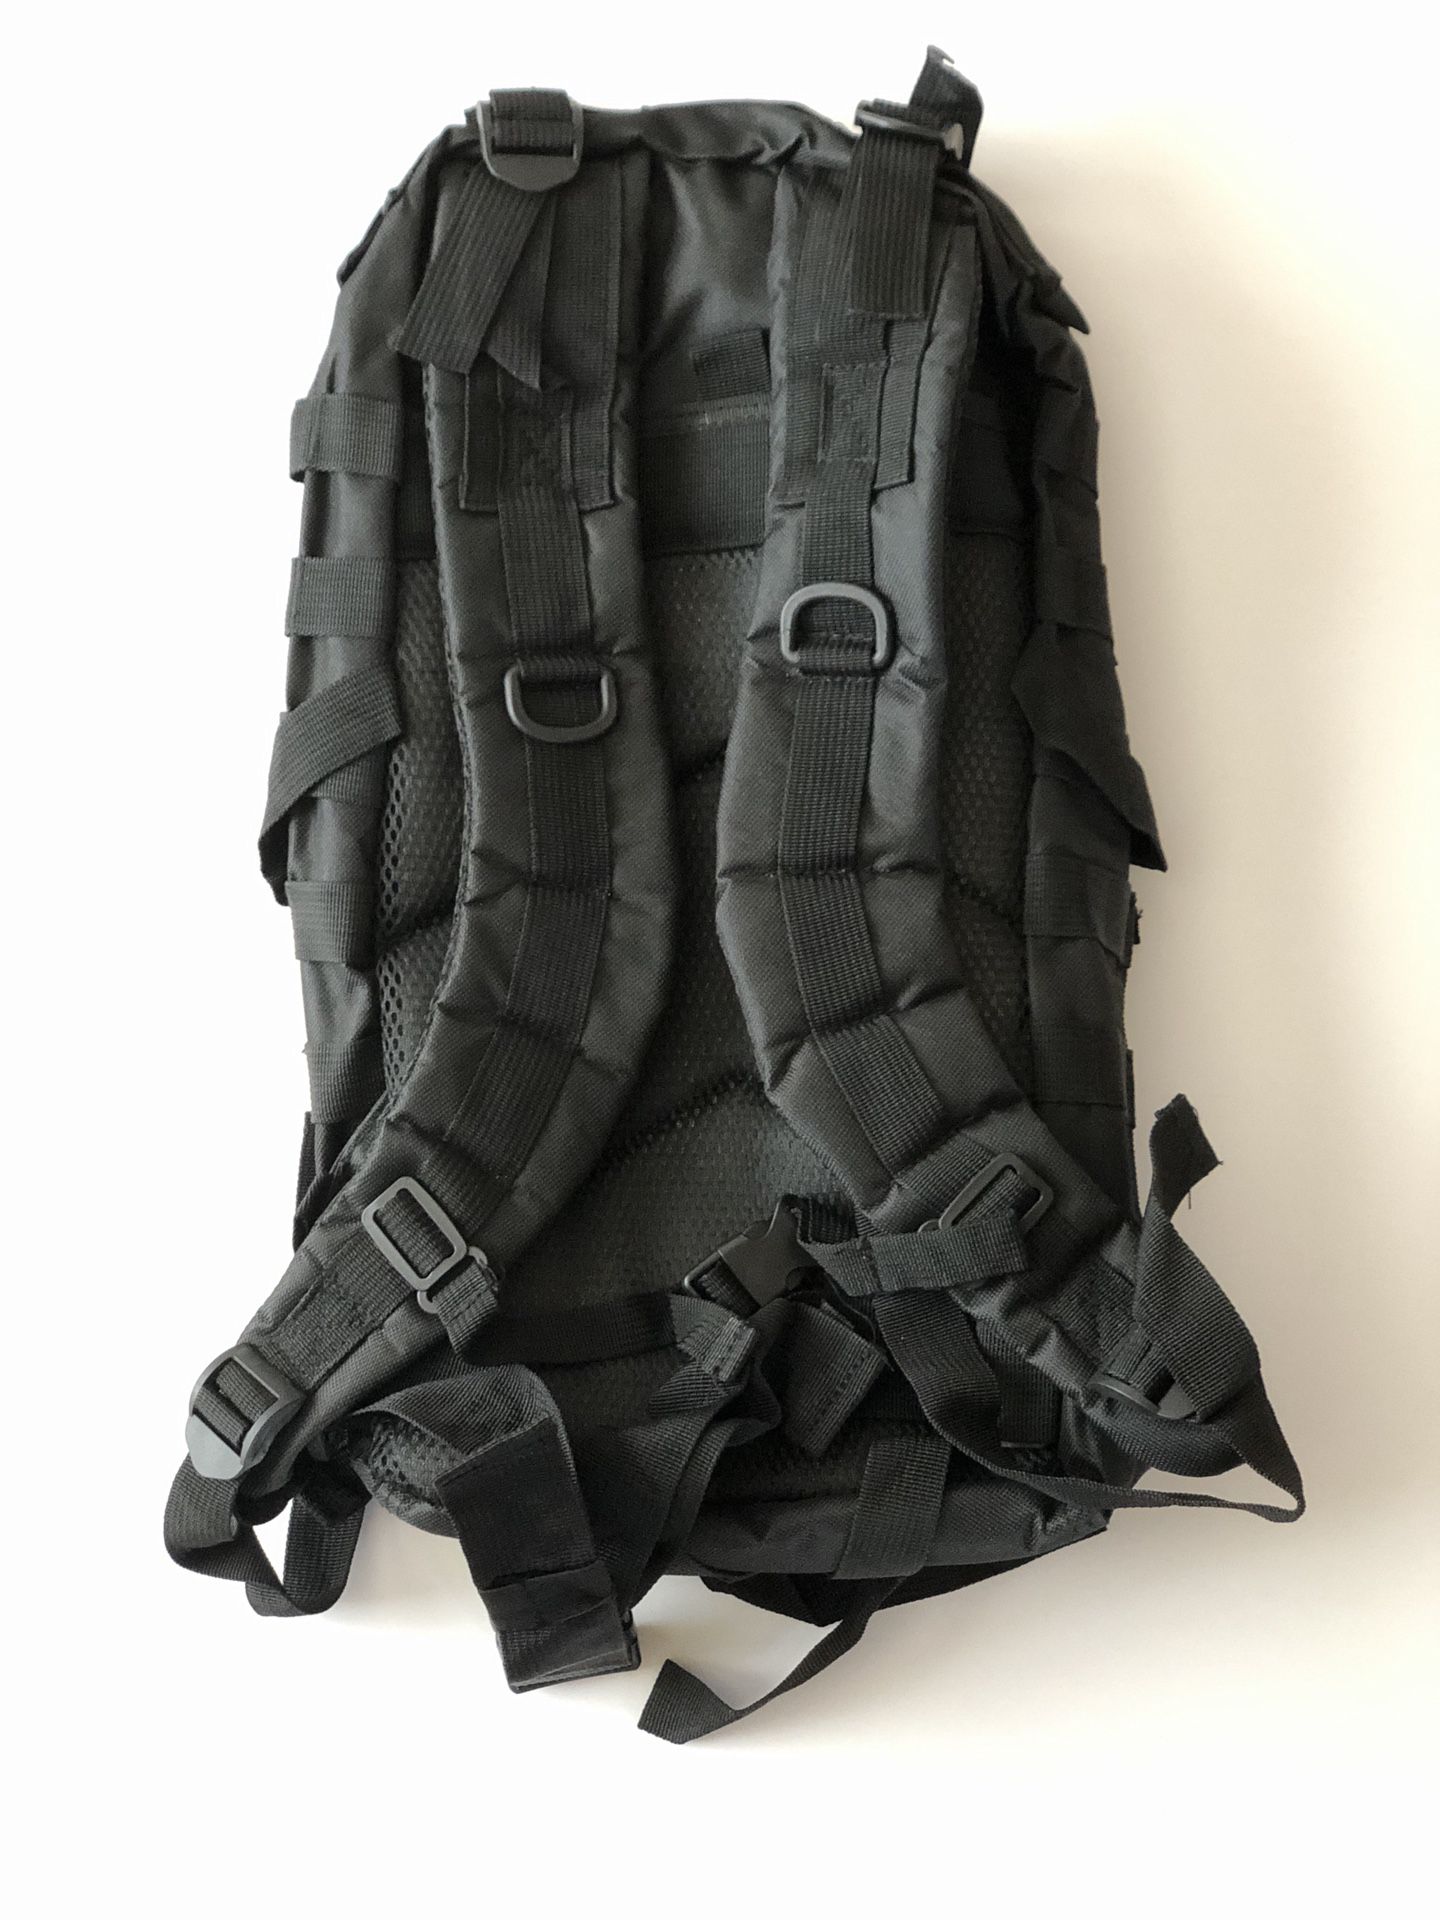 Black Tactical Backpack 35L - New